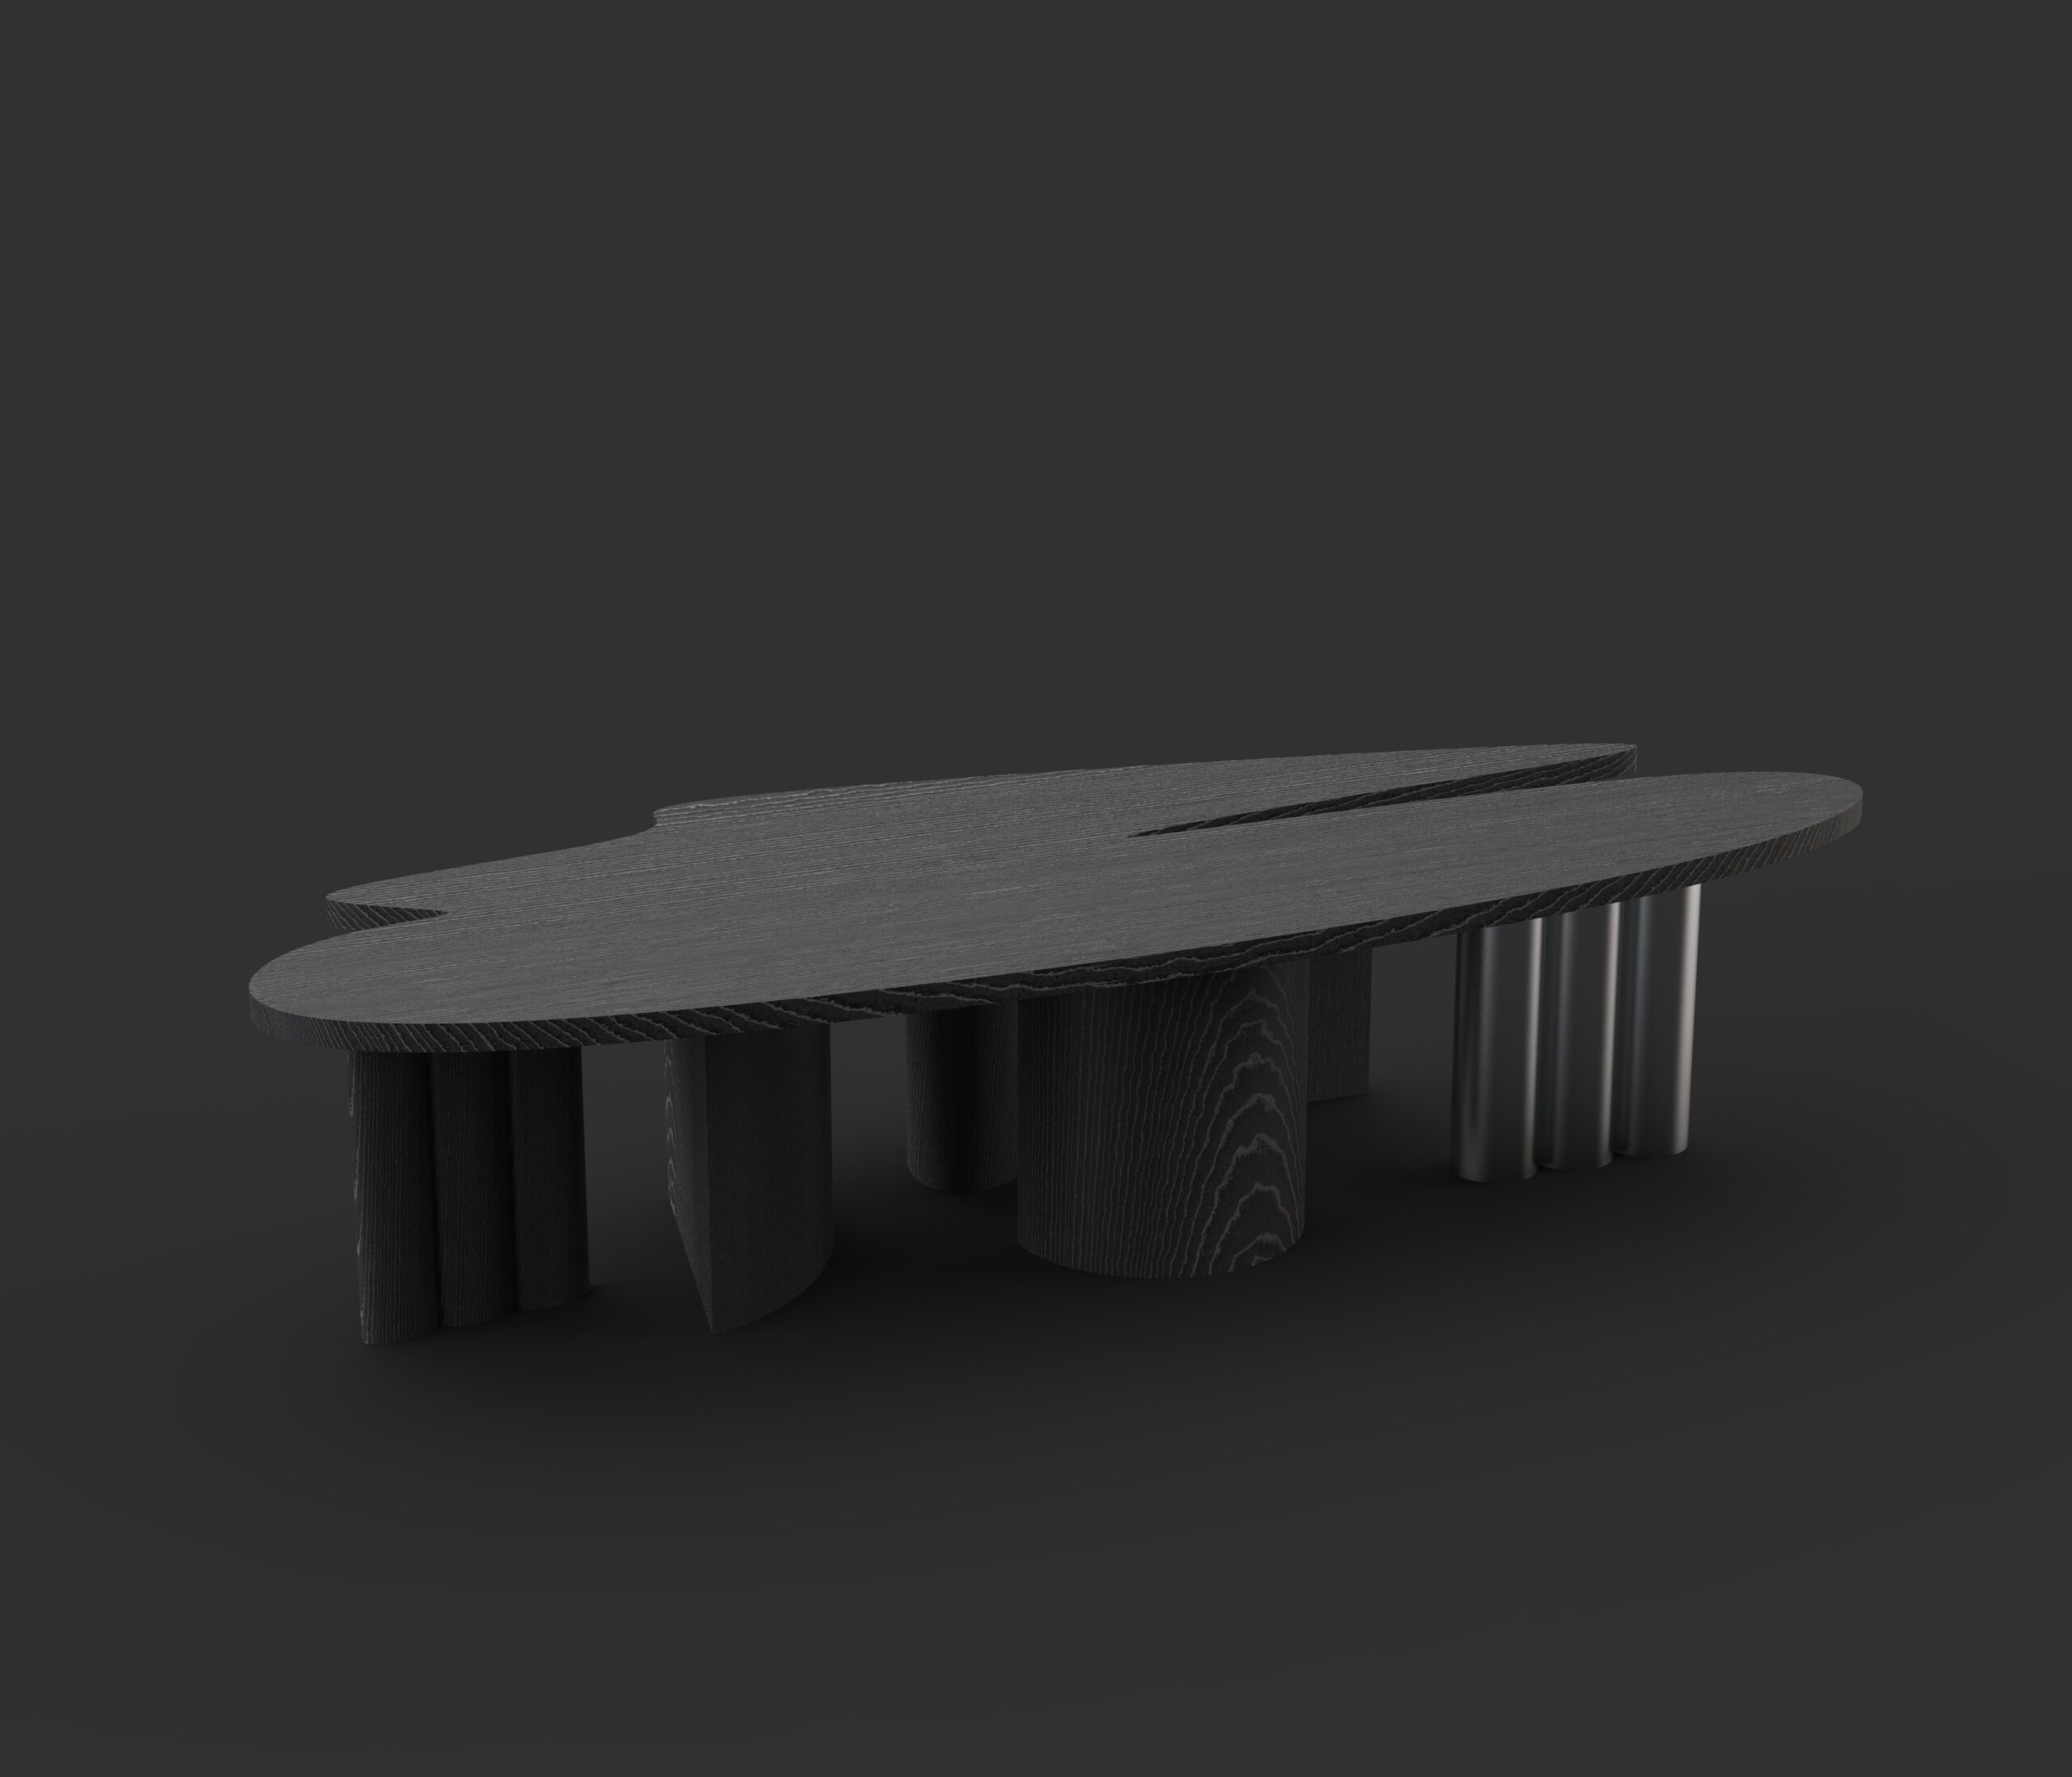 Nocturne-low-table-coffee-table-wooden-table-furniture-design-nizky-stul-konferencni-stolek-drevenny-stul-designed-by-jiri-krejcirik-